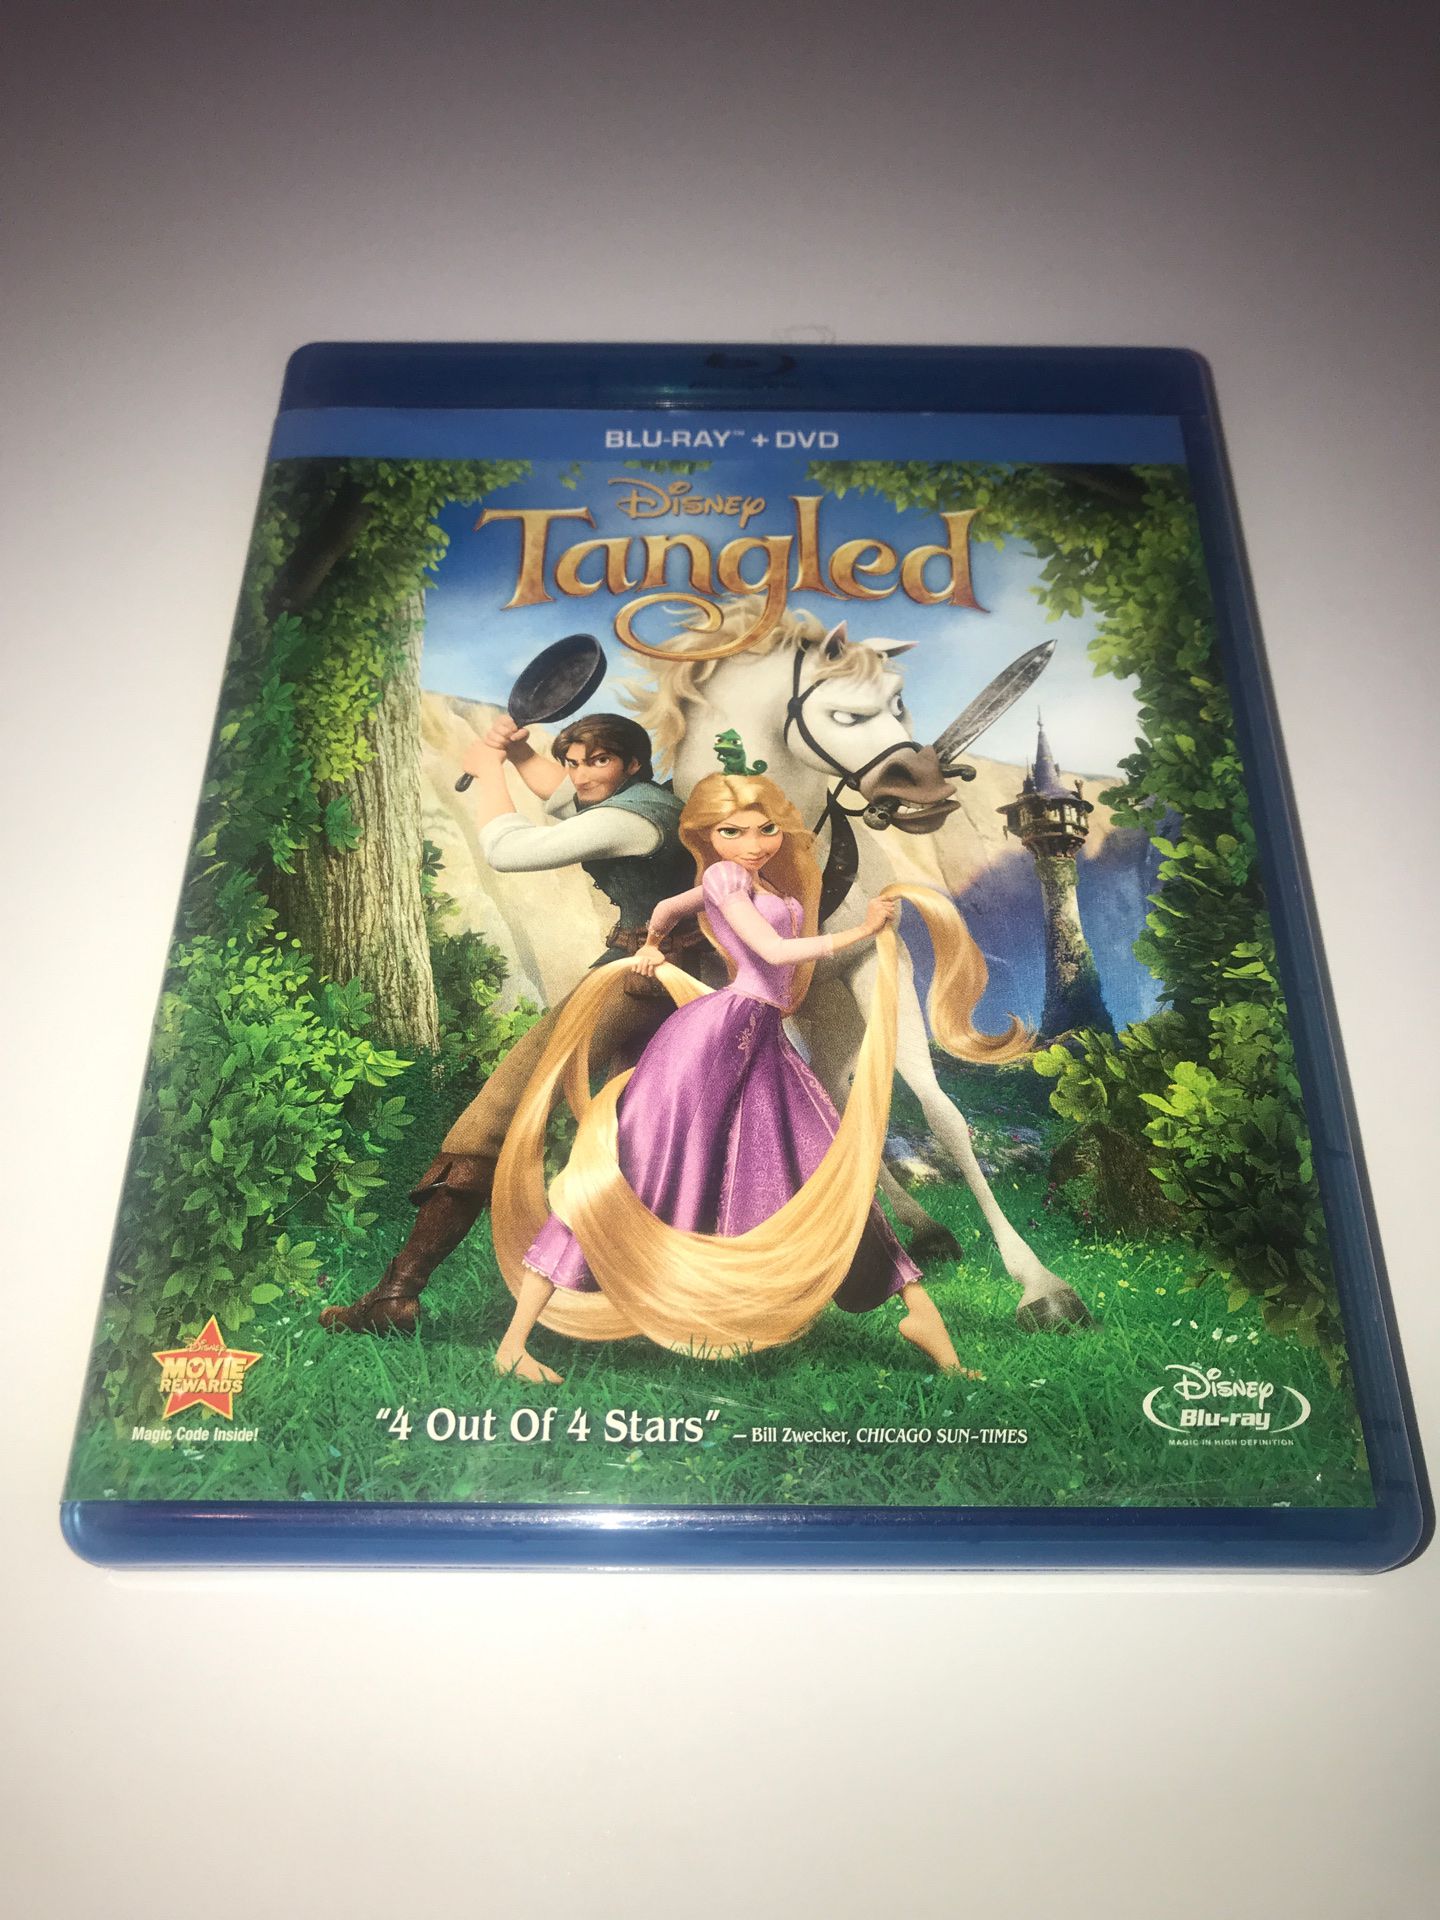 Disney’s Tangled Blu-ray